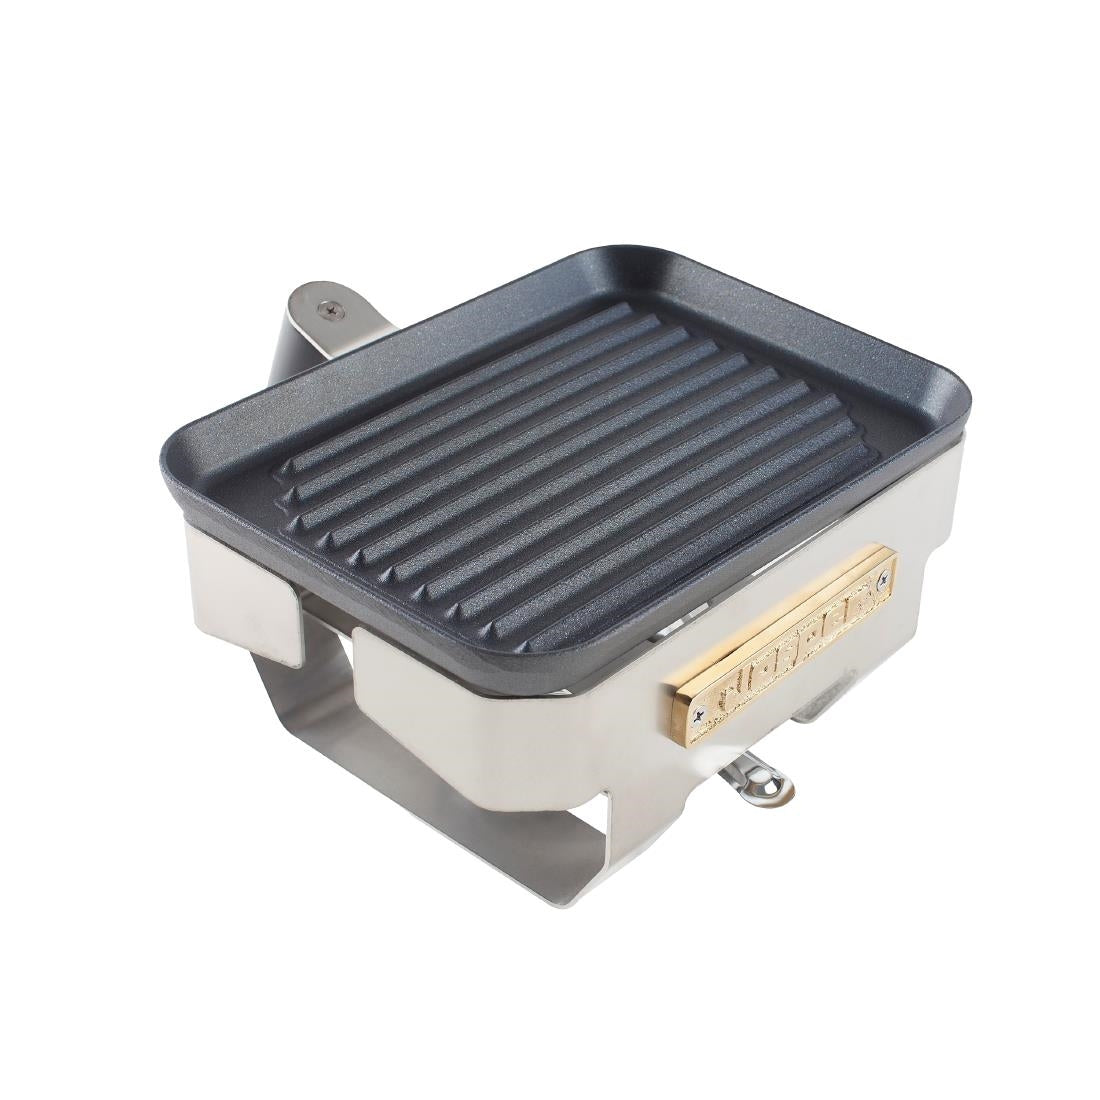 AT337 Josper Charcoal Oven Mini Tabletop Grill Support